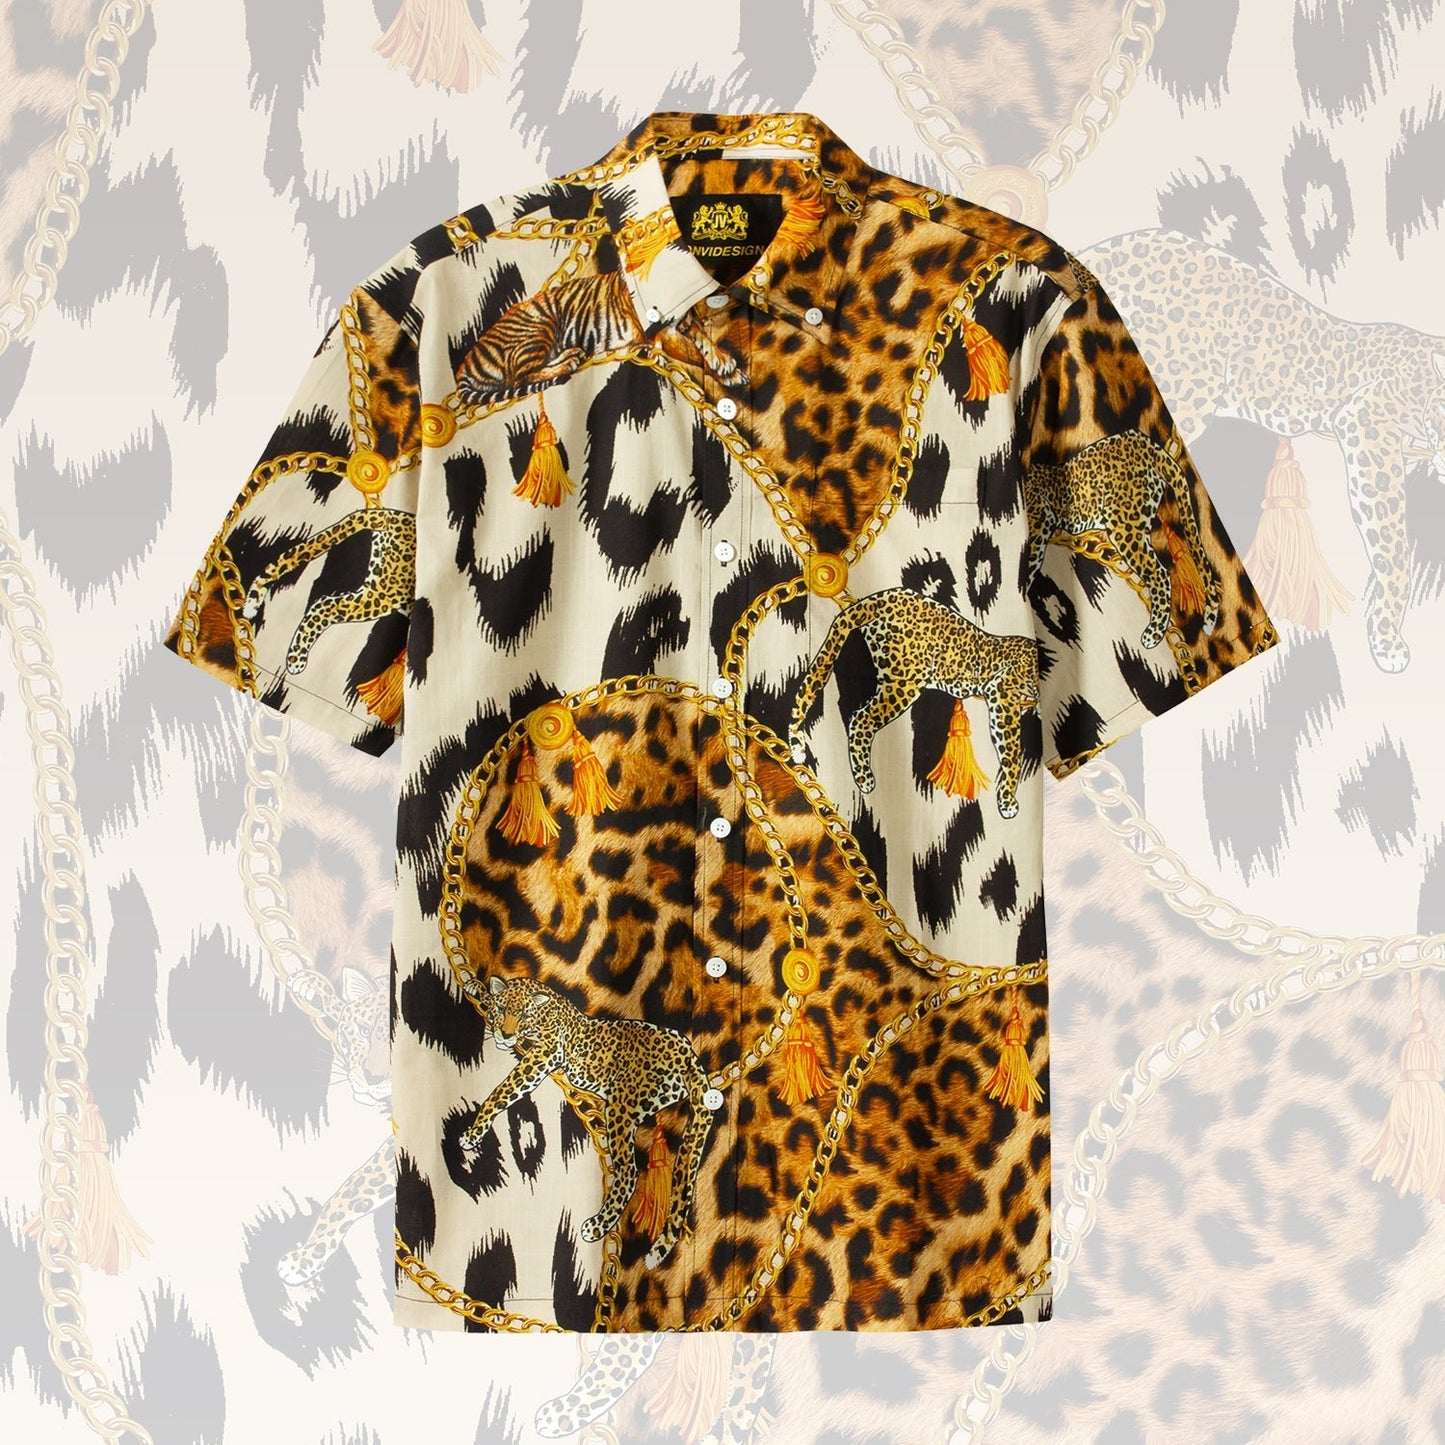 Wild Animal Print Short Sleeve Shirt with Golden Chain Accent Jonvidesign